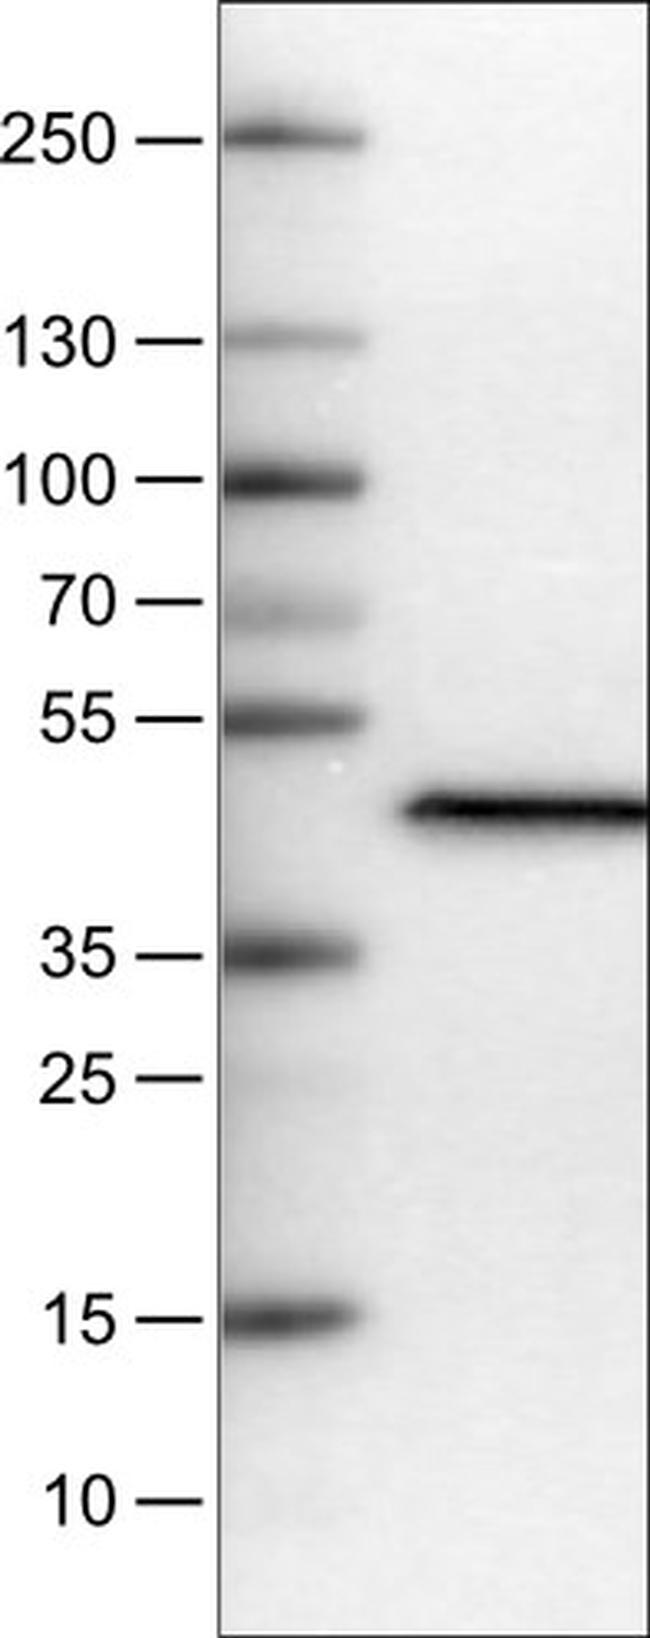 Apolipoprotein A4 Antibody in Western Blot (WB)